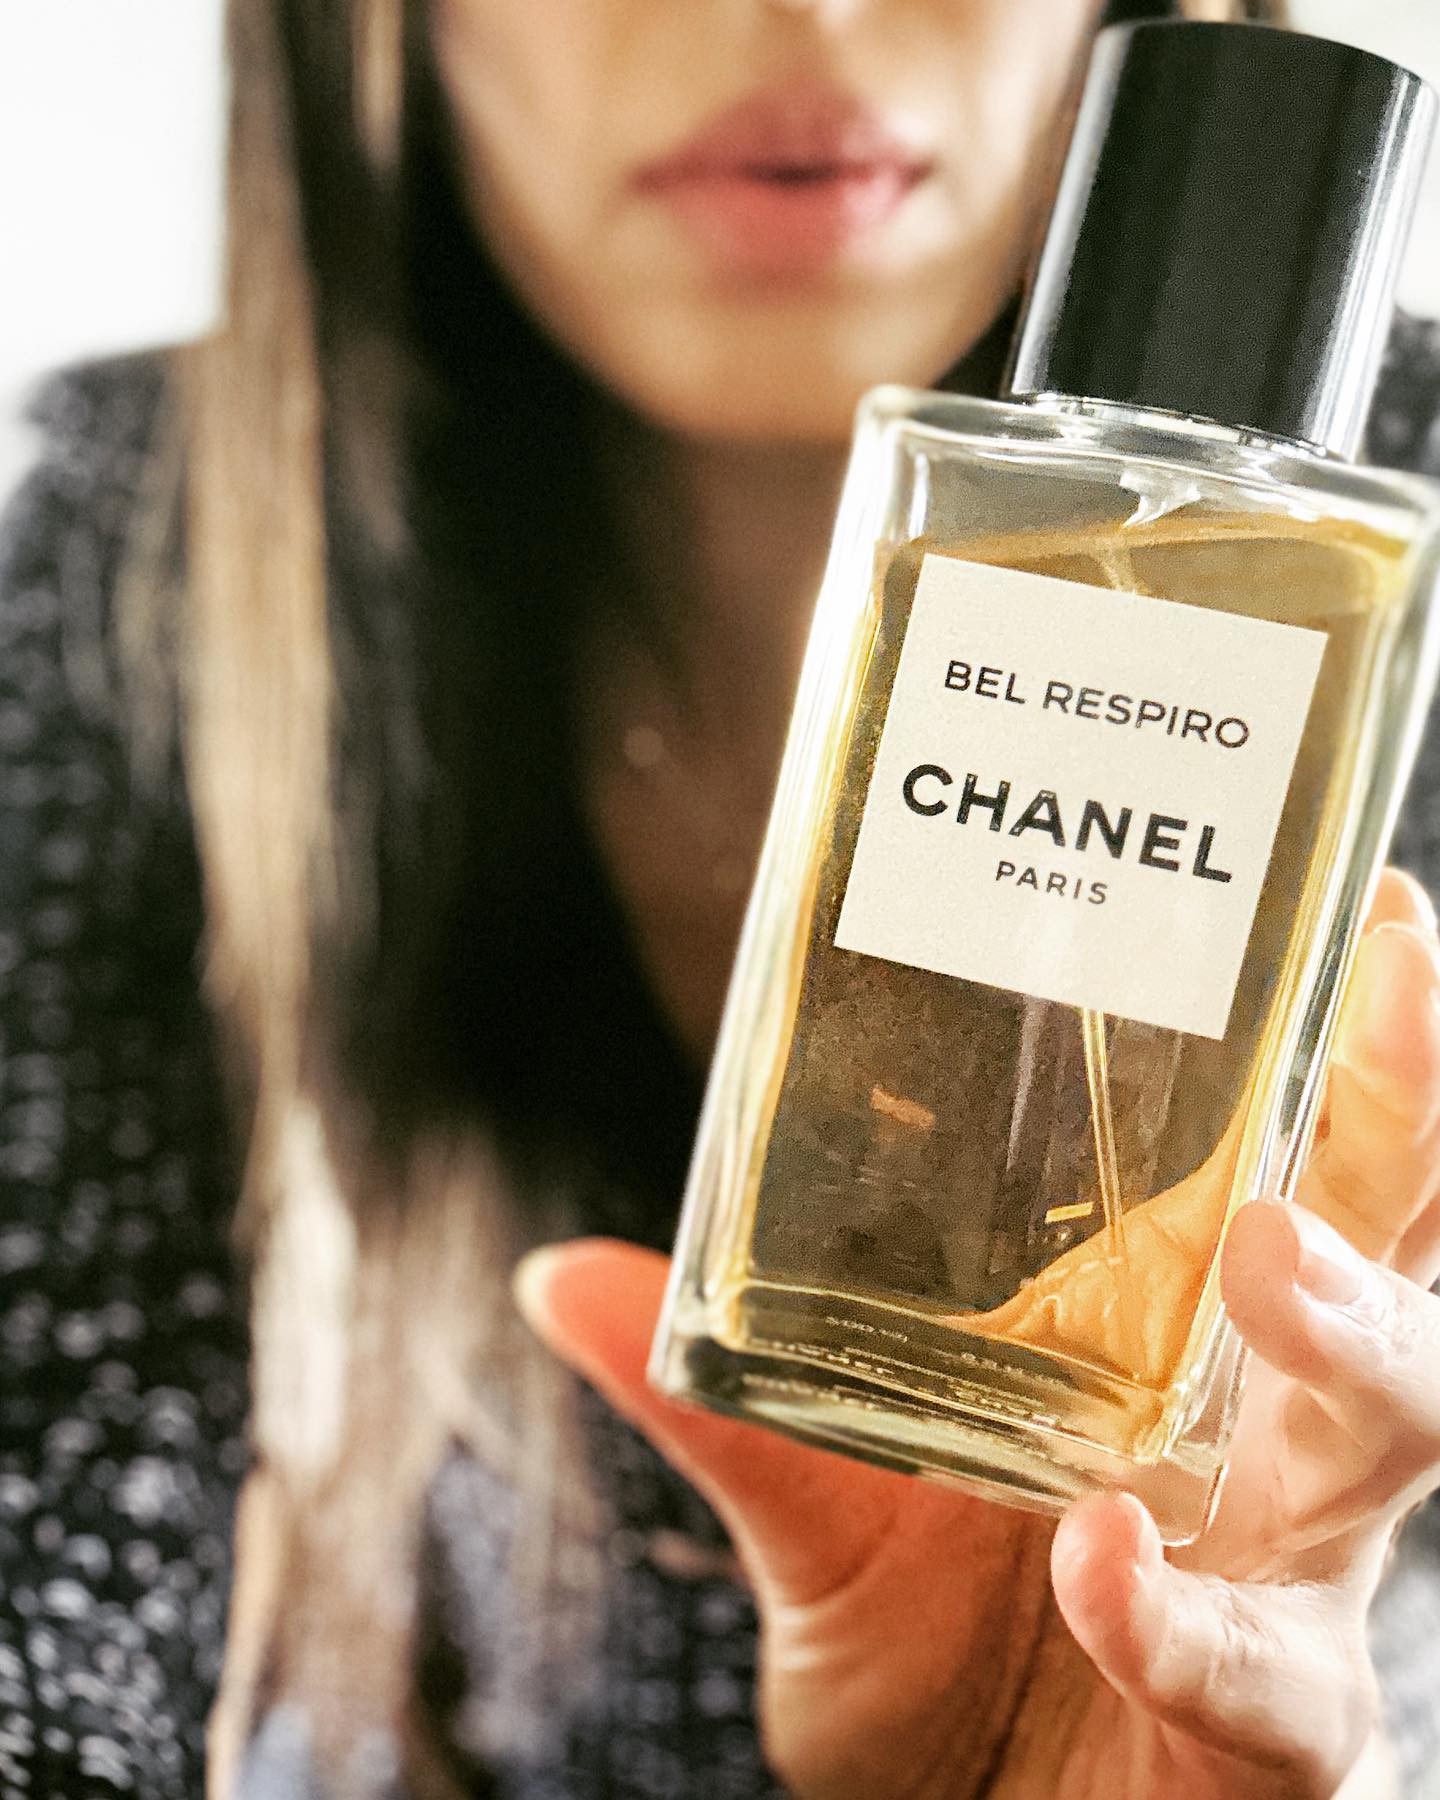 Chanel Bel Respiro Perfume Review